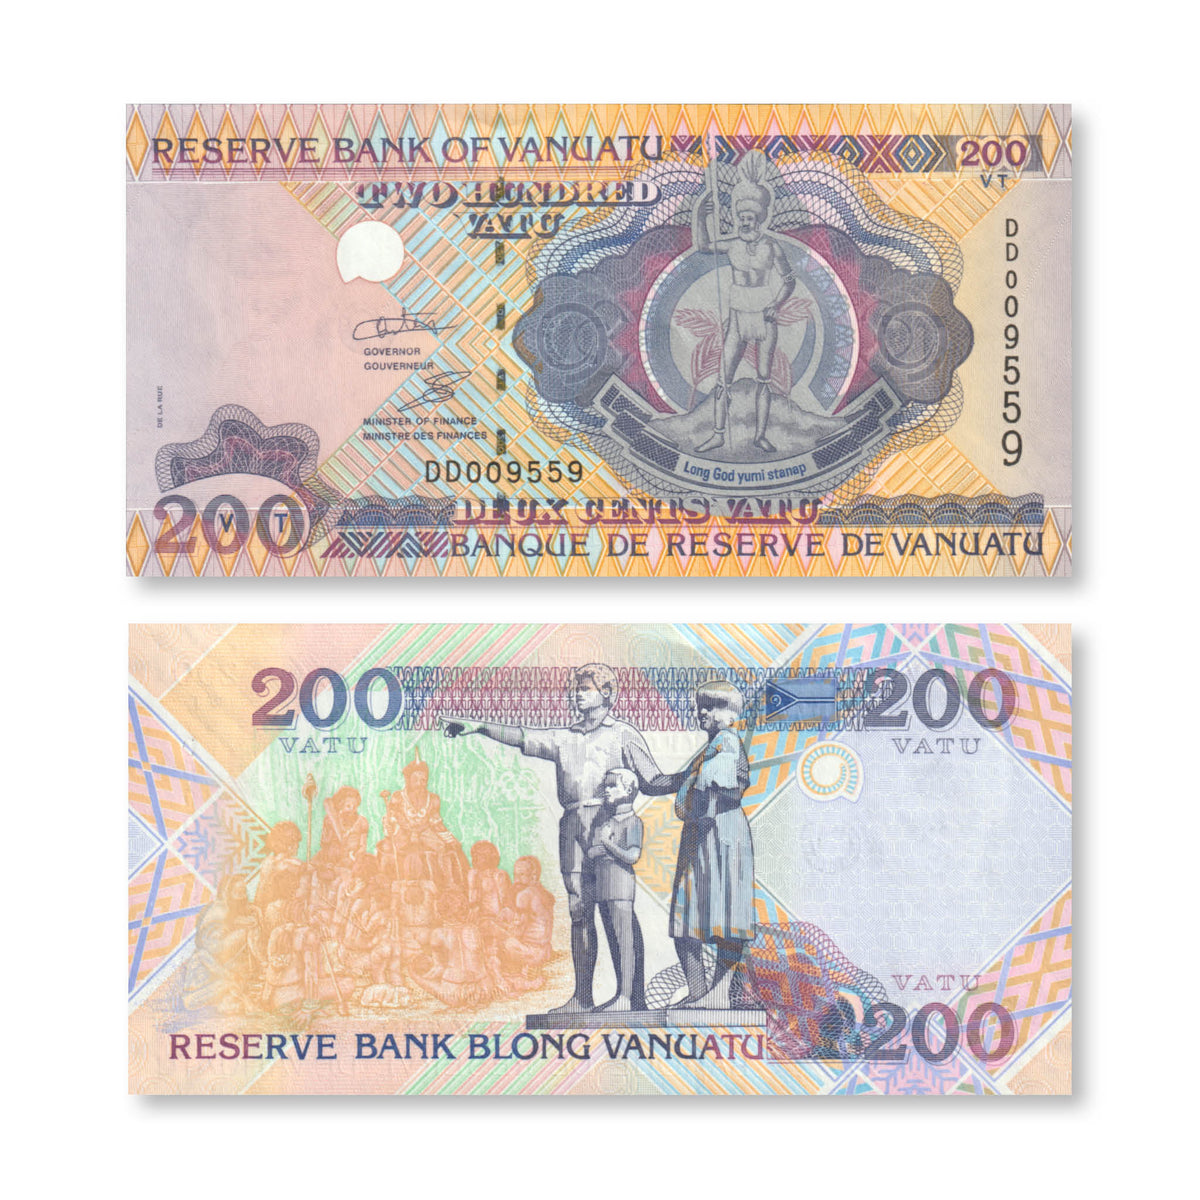 Vanuatu 200 Vatu, 1995, B203c, P8c, UNC - Robert's World Money - World Banknotes